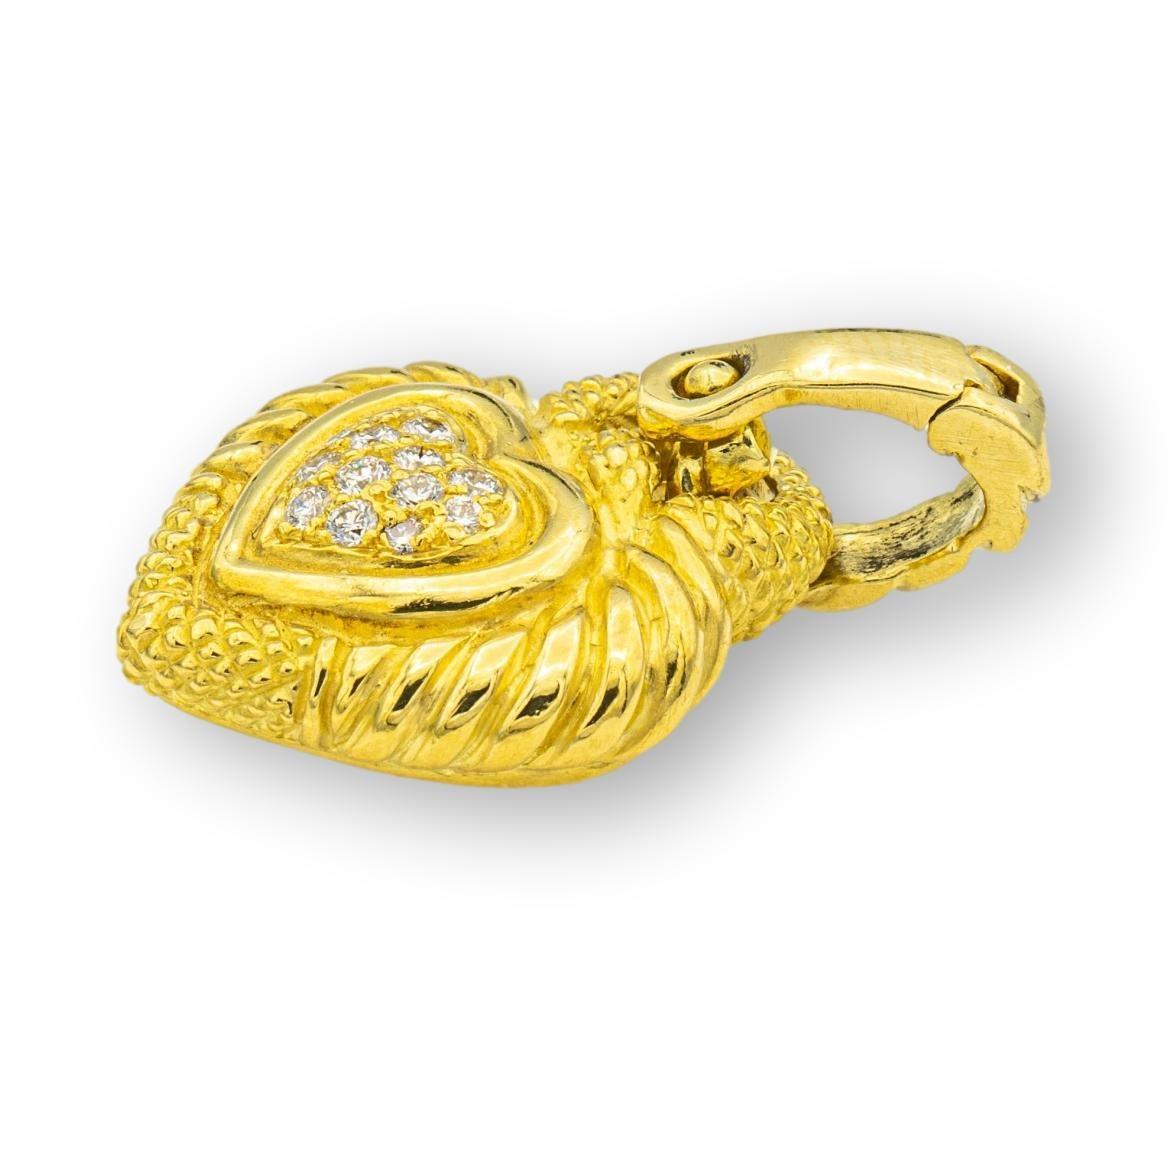 Round Cut Judith Ripka 18K Yellow Gold Heart Charm Enhancer Pendant with Pave Diamonds